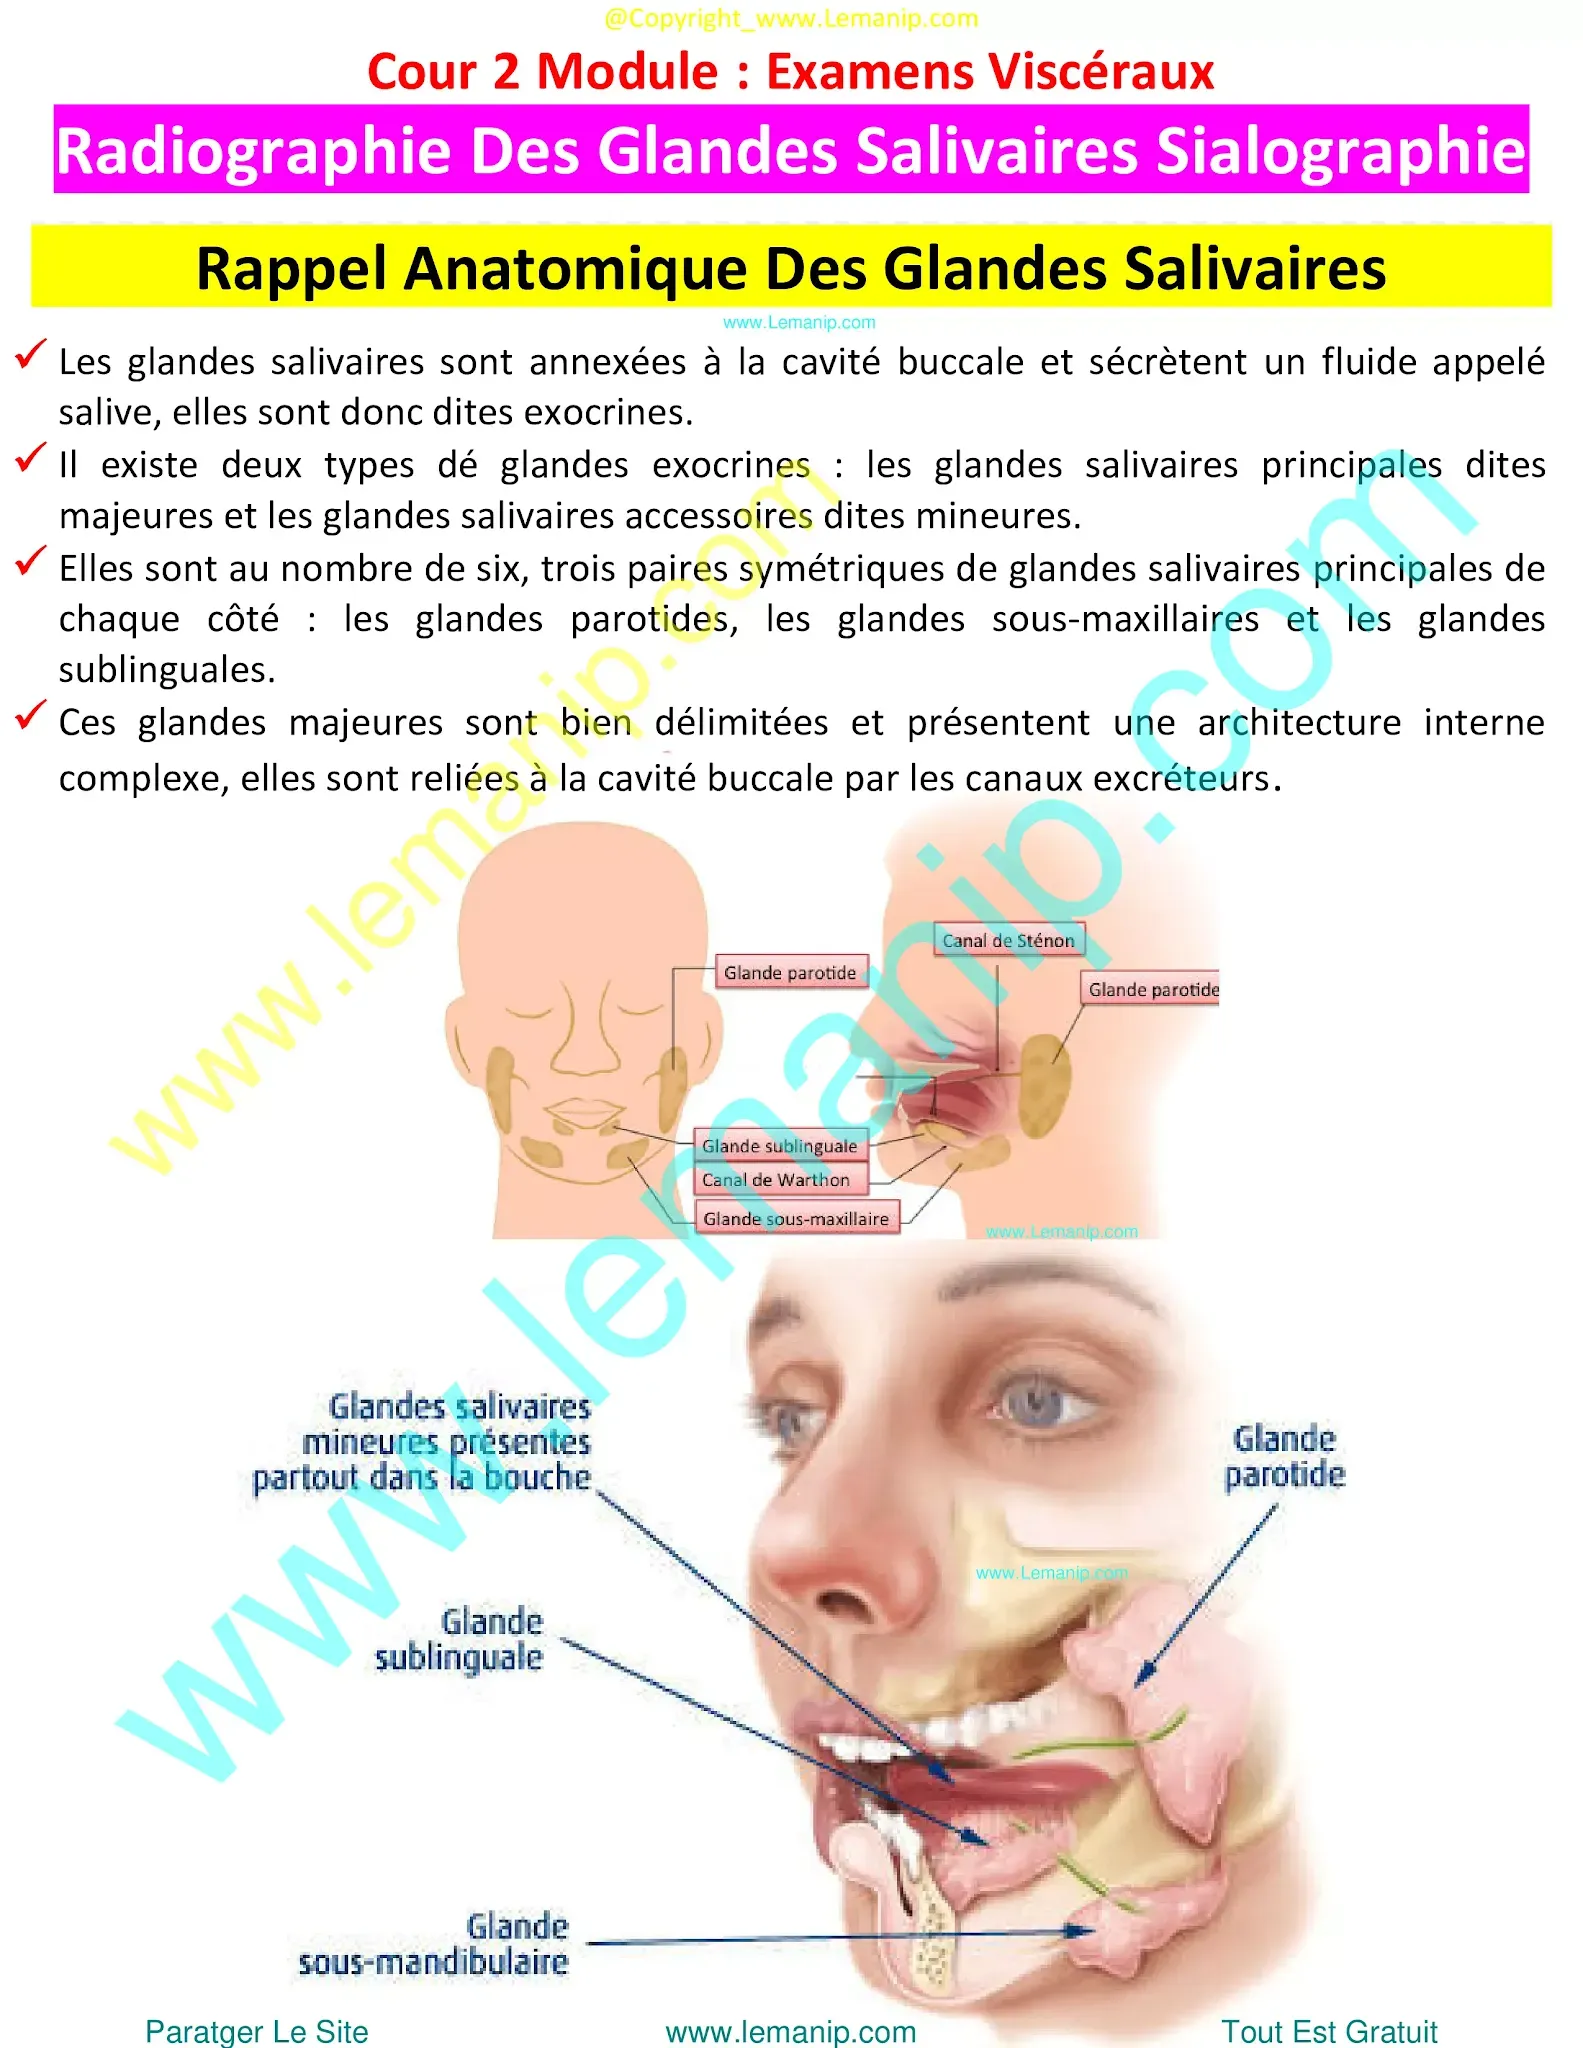 removing salivary gland,sjogren's swollen glands,left parotid,parotid duct,stensen's duct,parotid gland duct,swollen parotid glands both sides,swollen parotid gland on both sides,superficial parotid,inflamed salivary gland